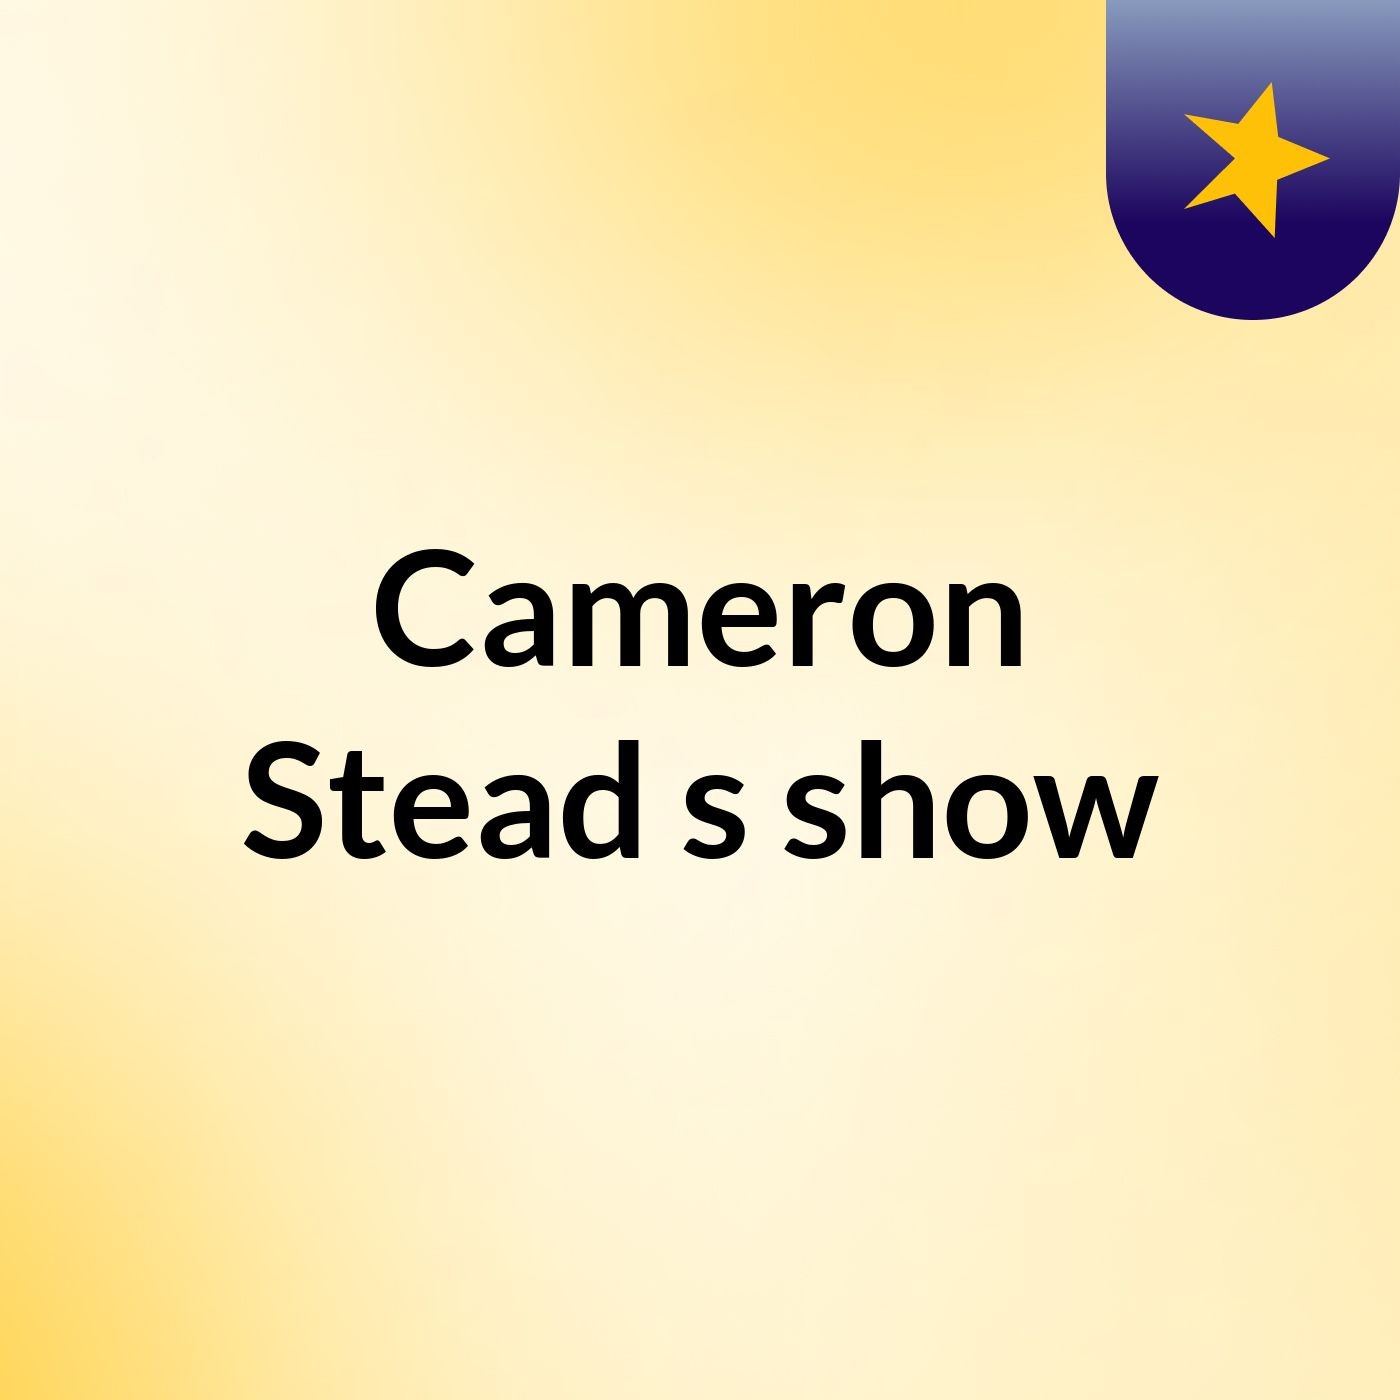 Cameron Stead's show